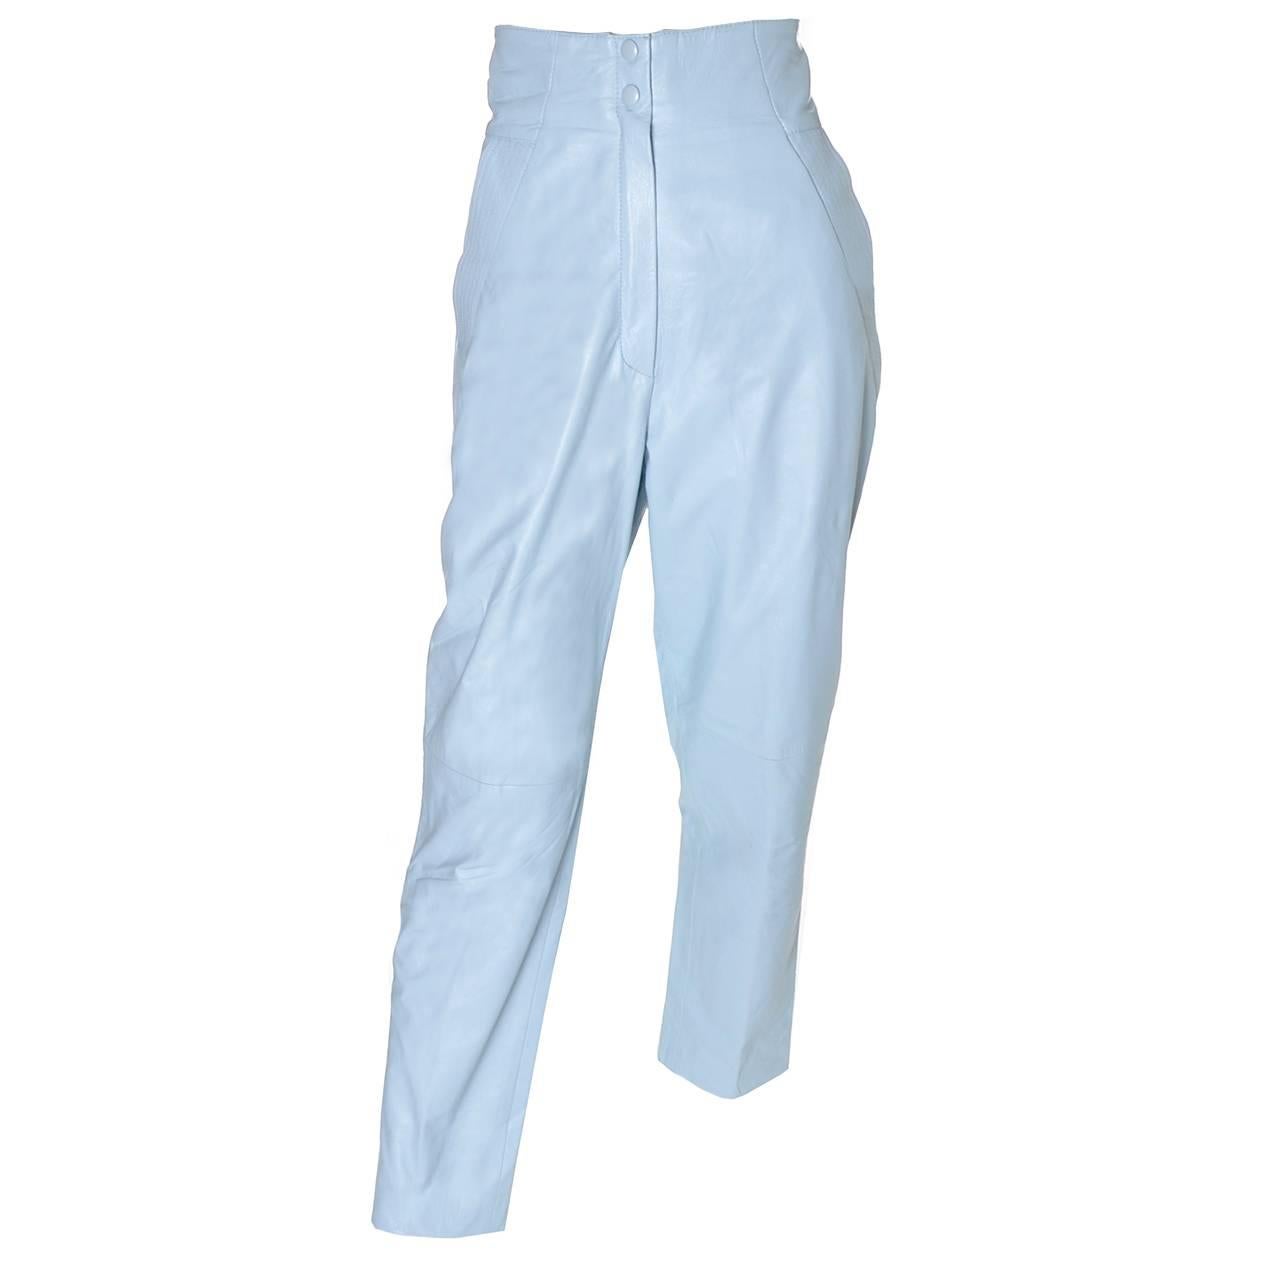 1980s Lillie Rubin Vintage High Waisted Blue Leather Pants Size 10